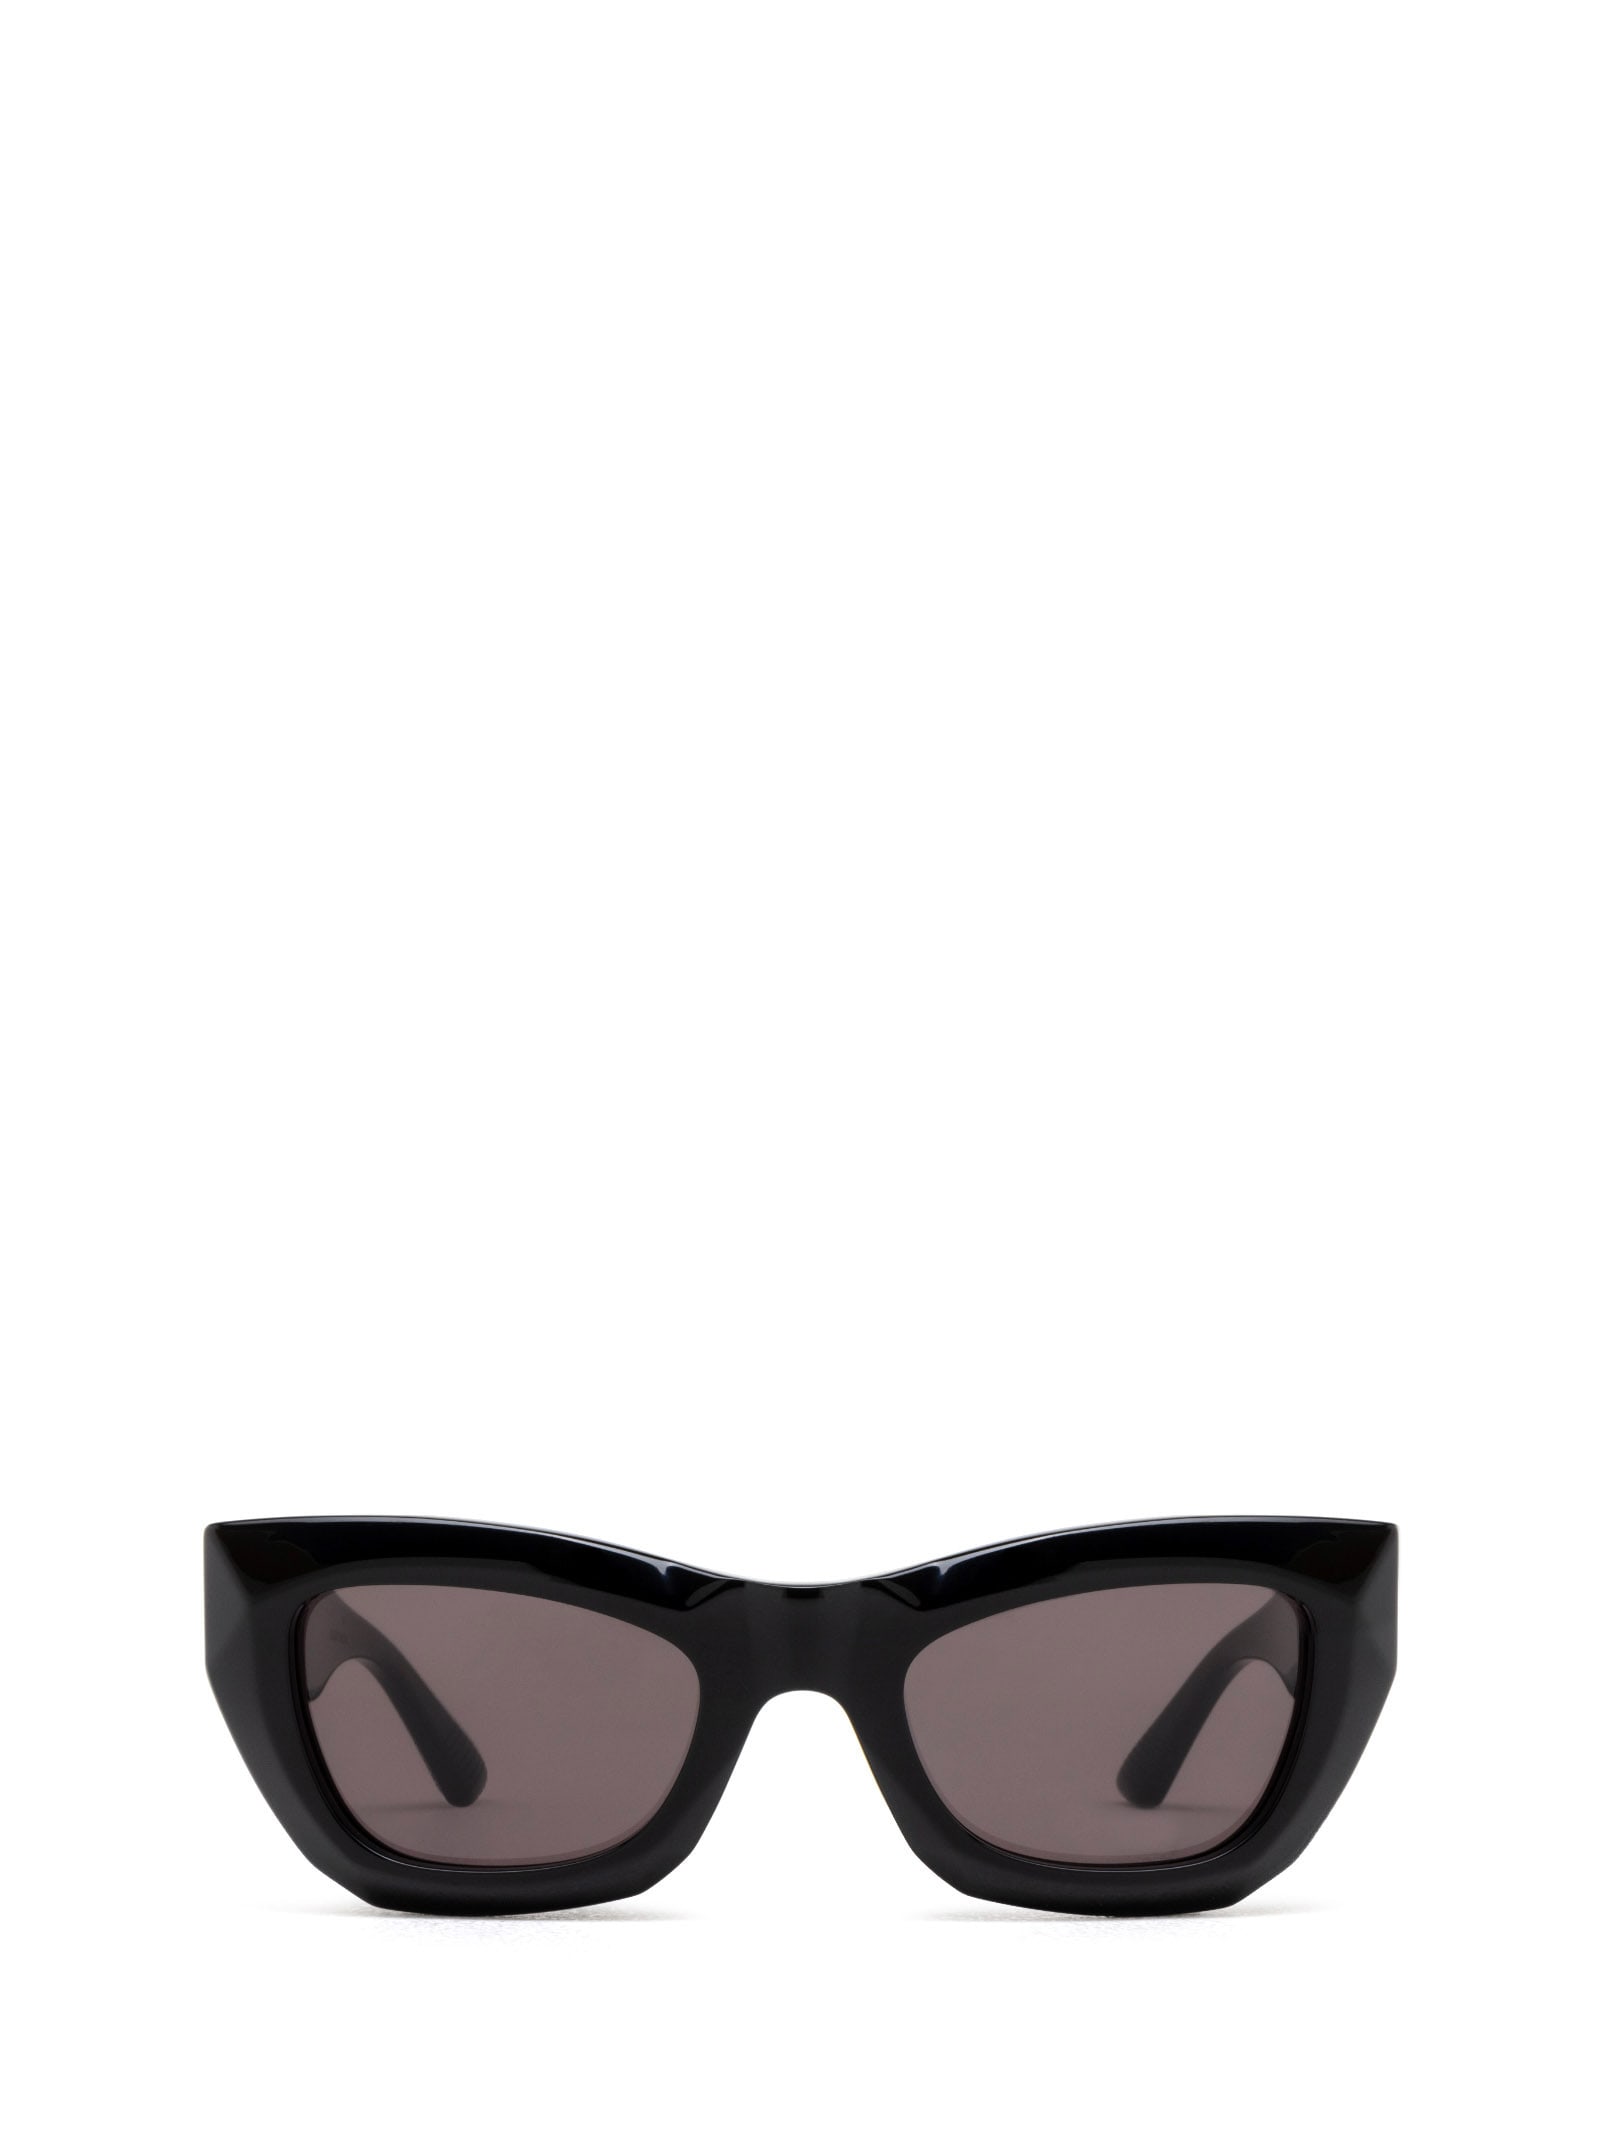 Bv1251s Black Sunglasses